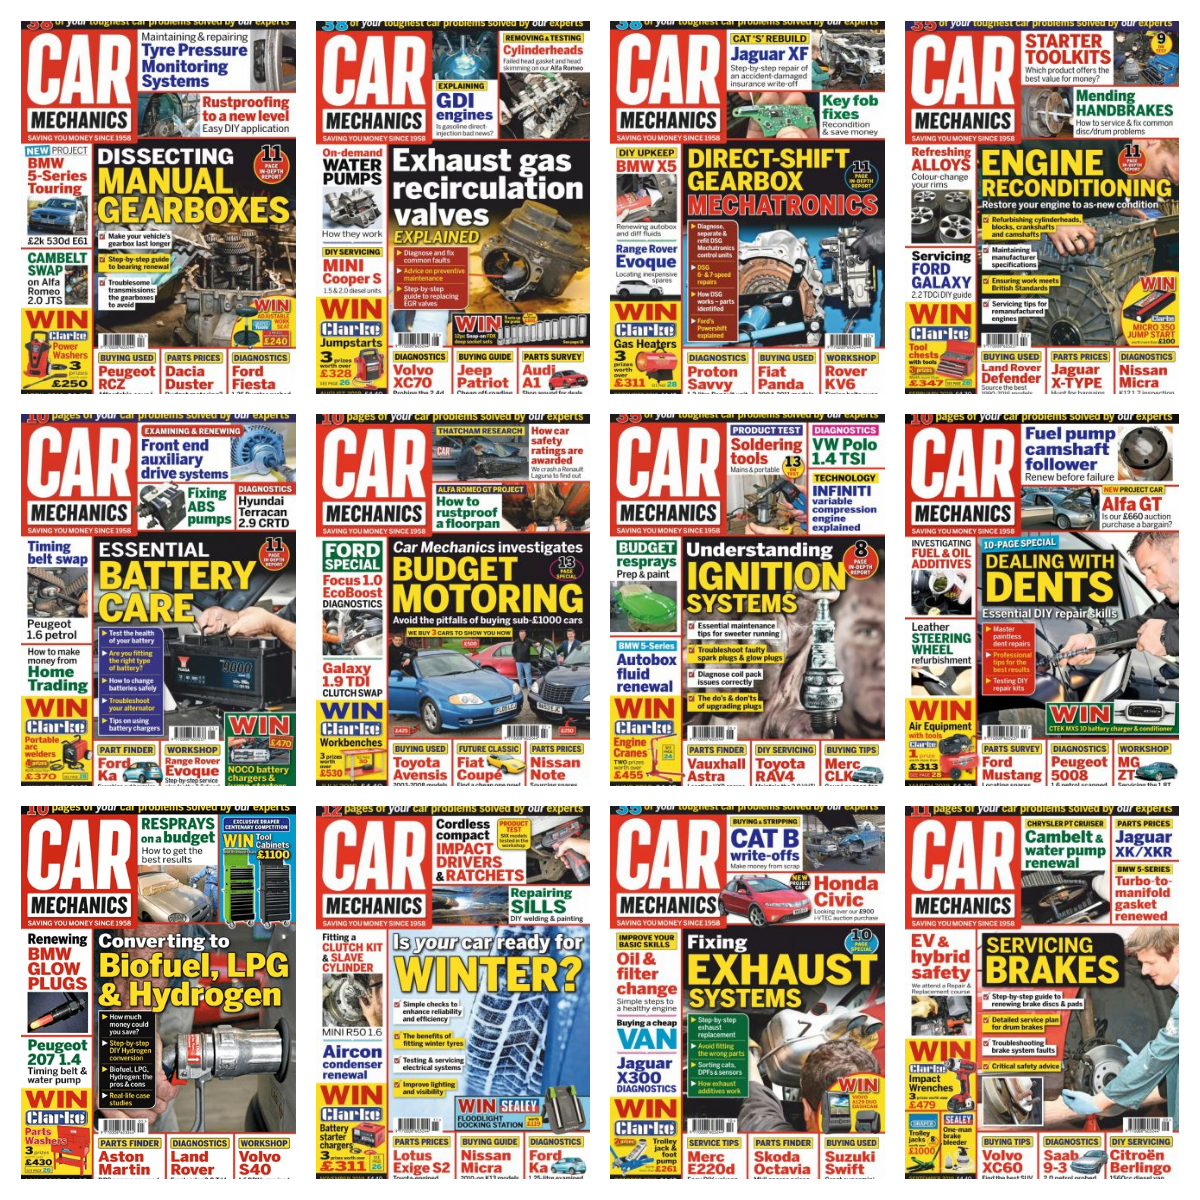 Car Mechanics pdf magazine. 